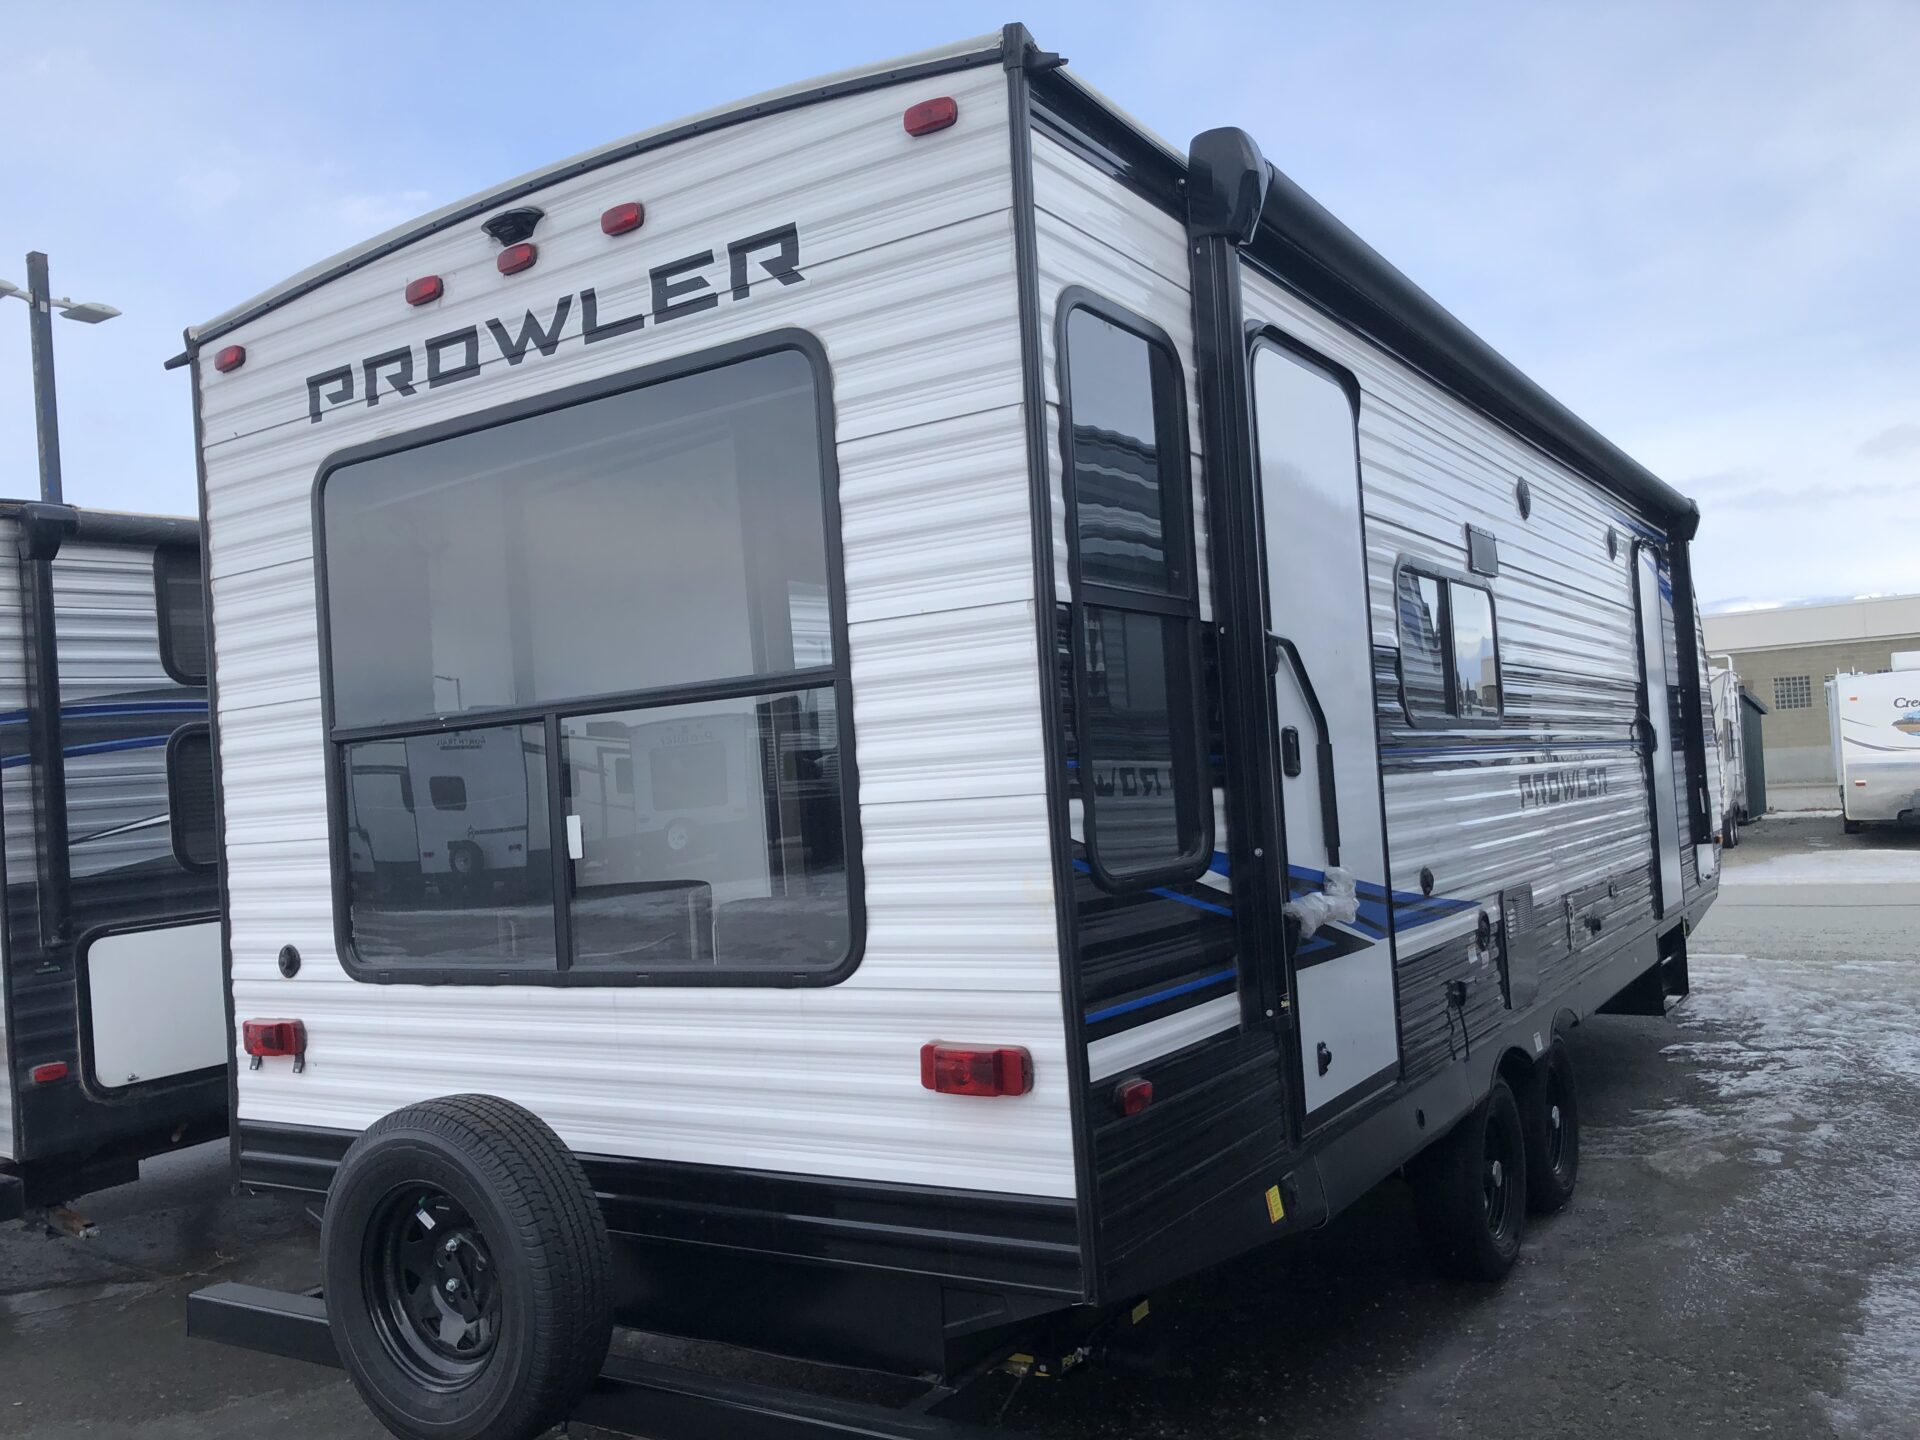 prowler RV